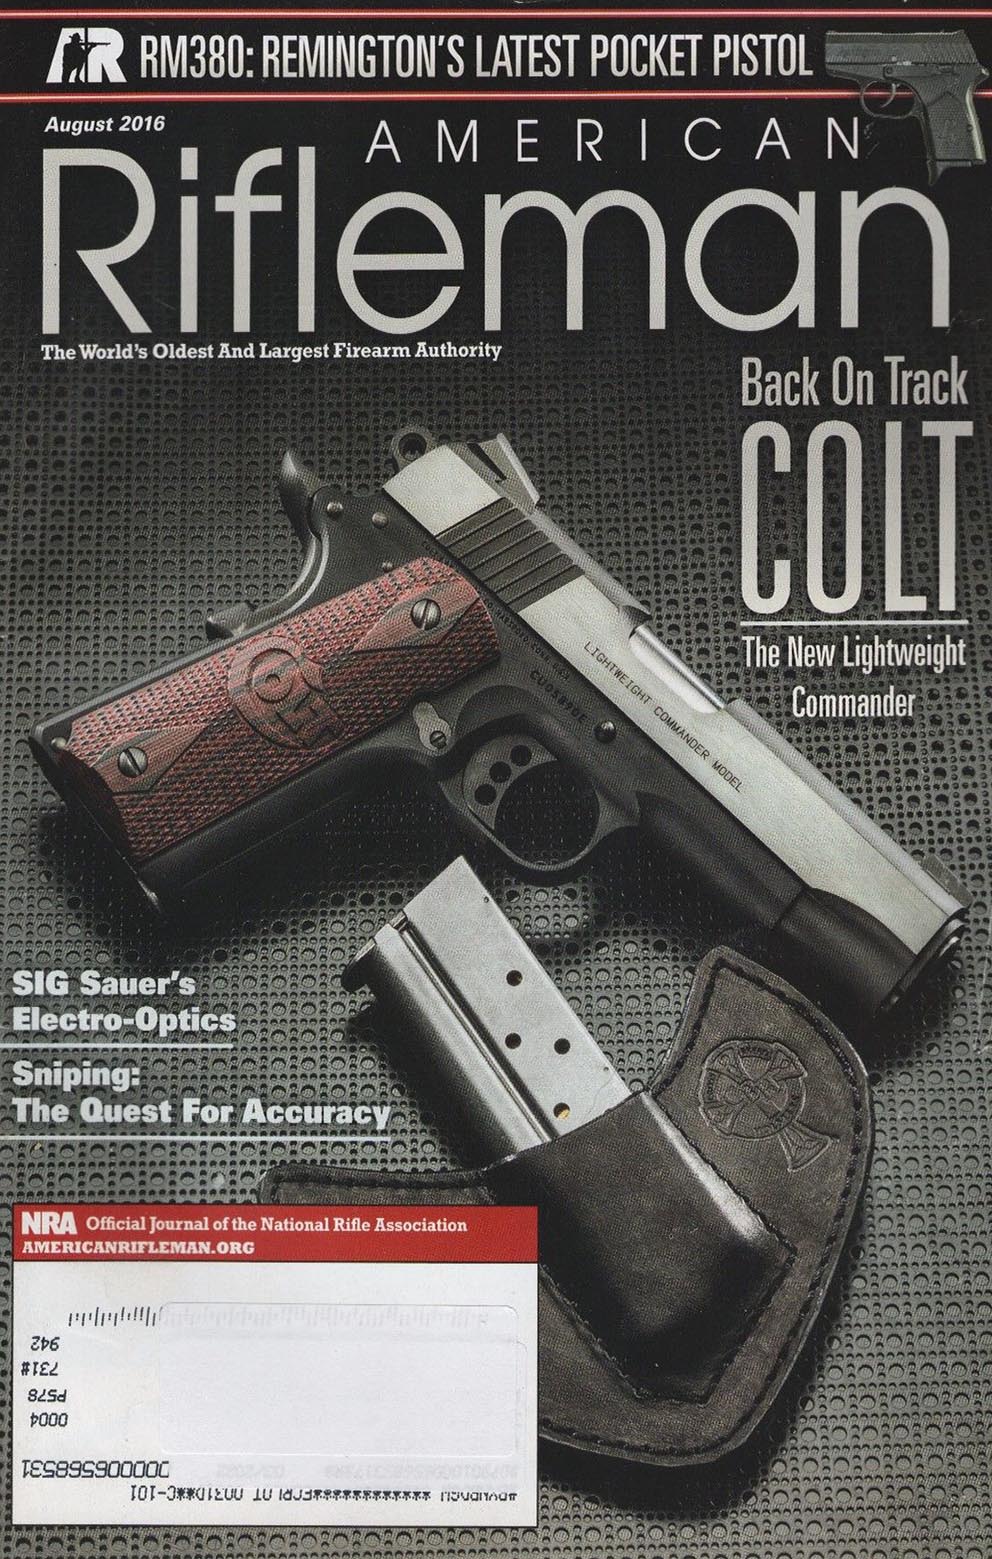 Rifleman Aug 2016 magazine reviews